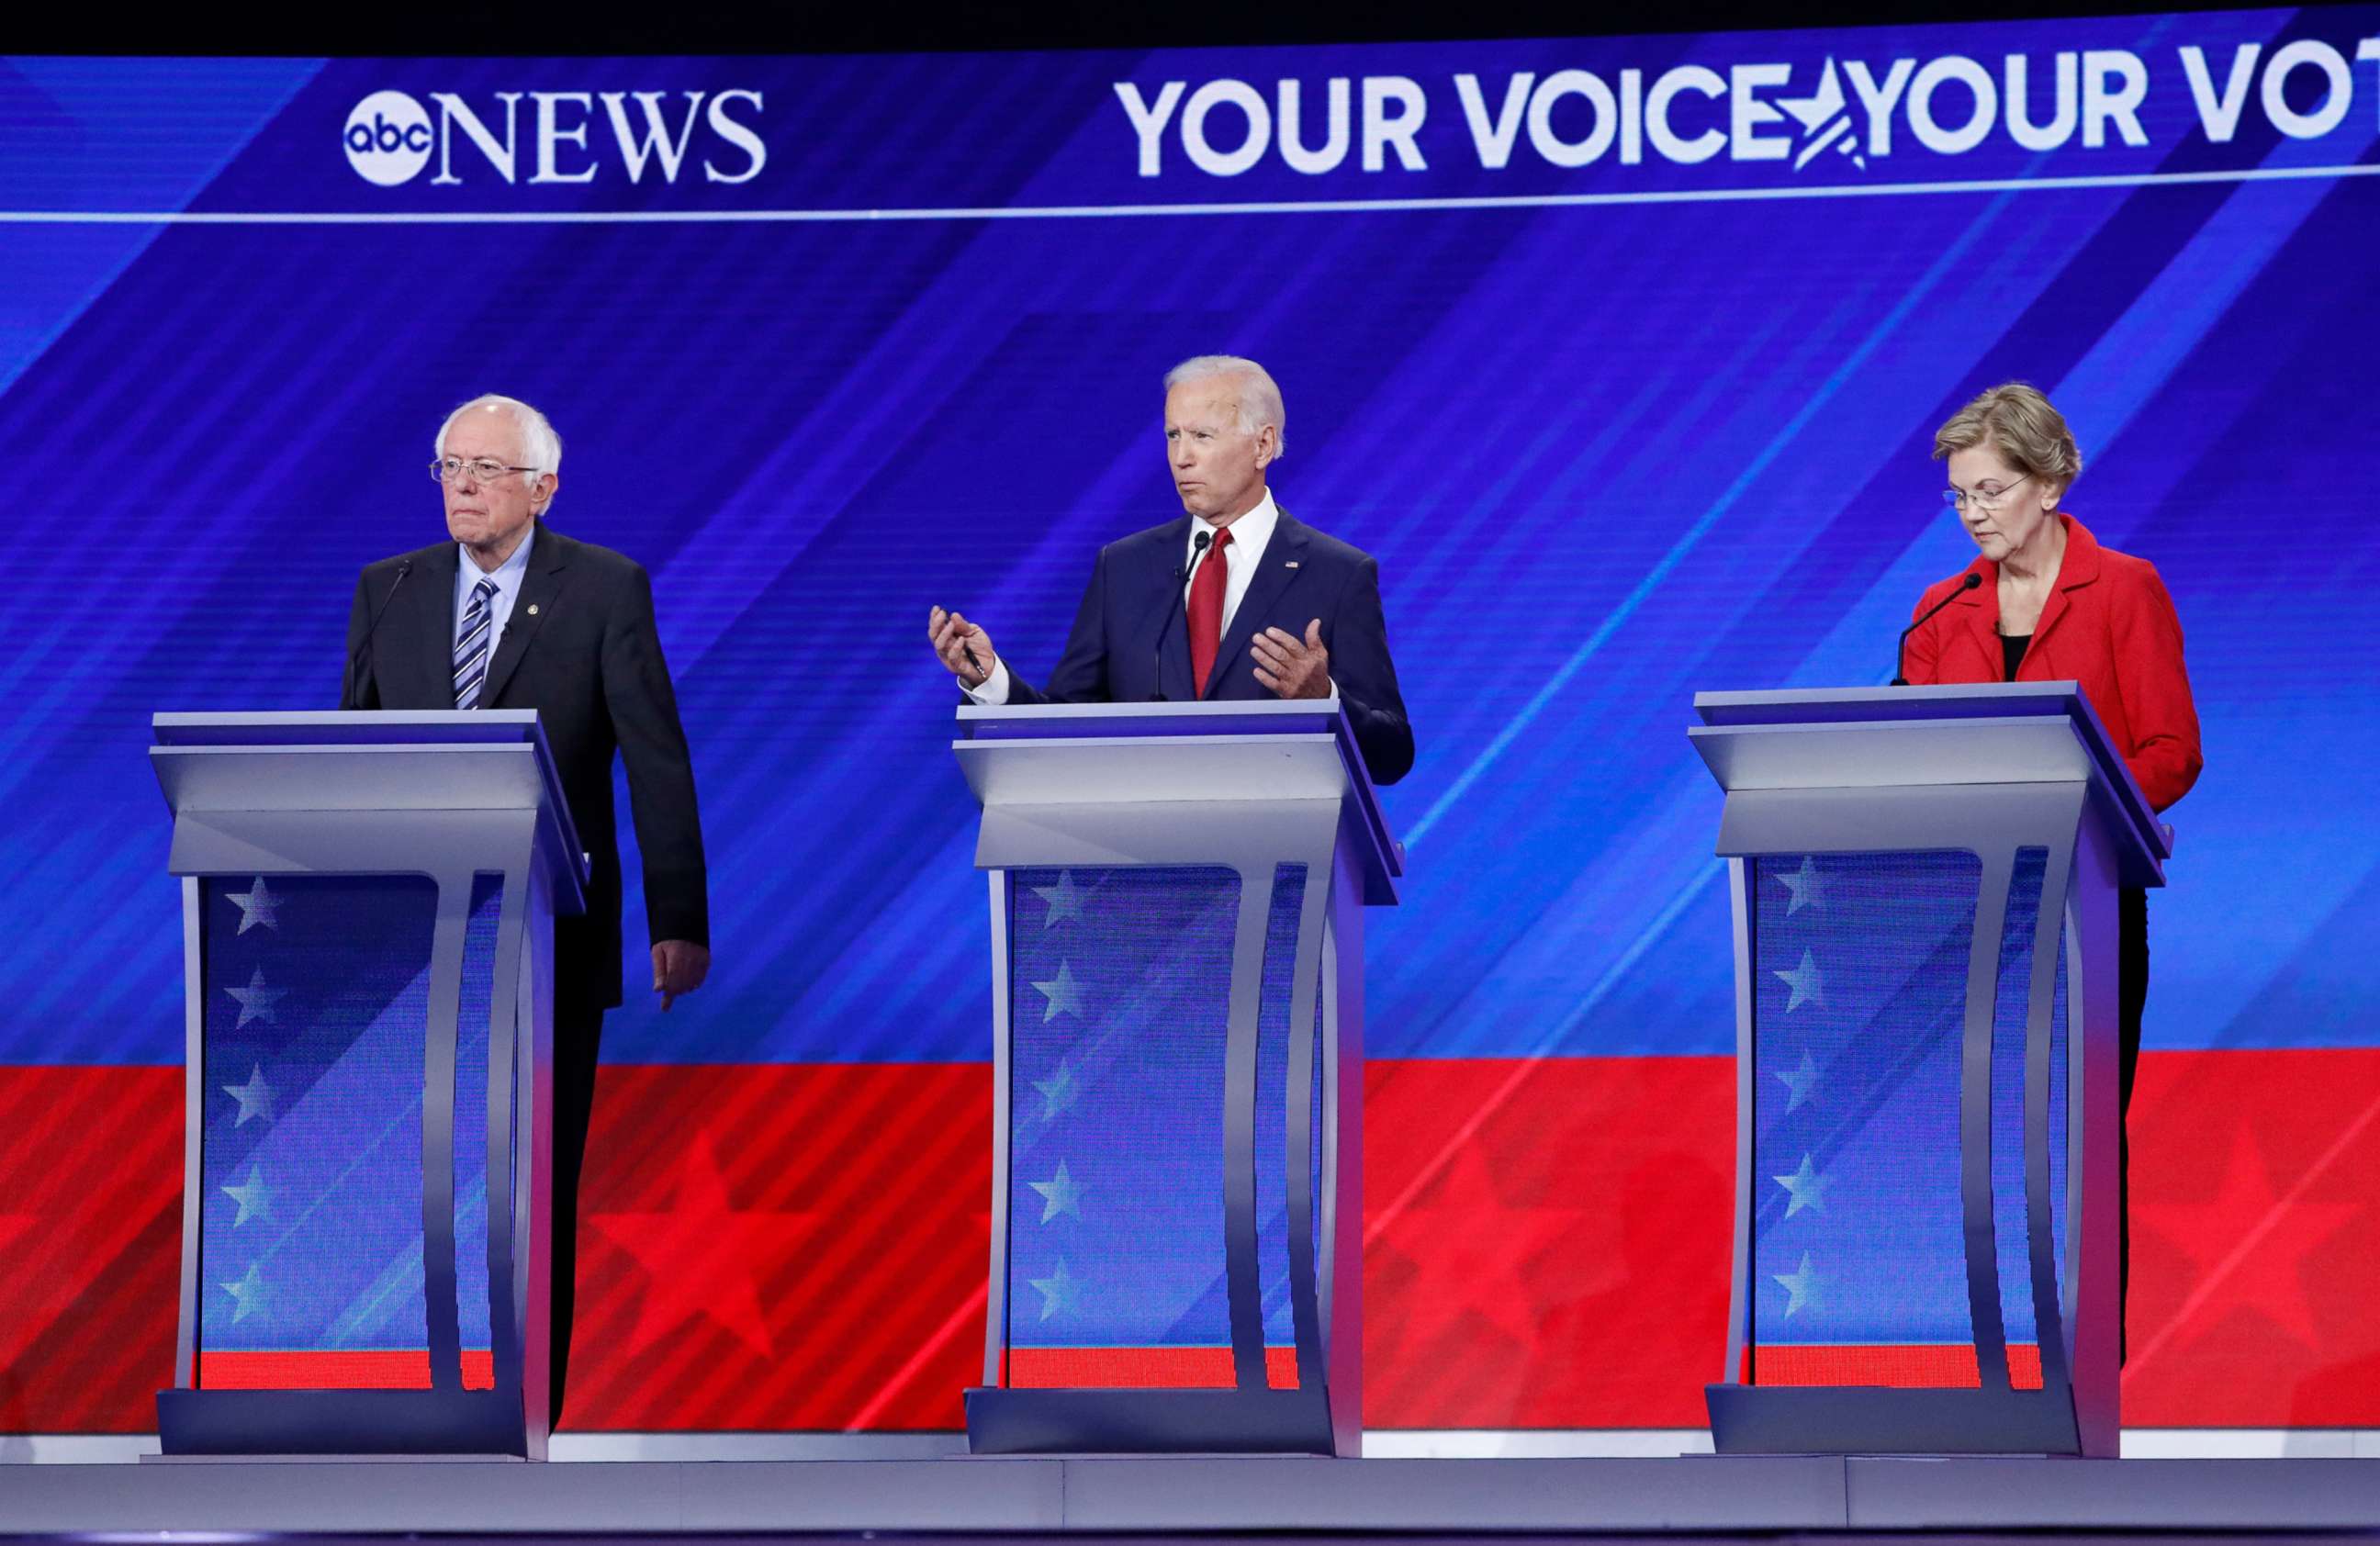 PHOTO: Democratic presidential candidates Benrie Sanders, Joe Biden and Elizabeth Warren take part in the a debate at Texas Southern University, Sept. 12, 2019, in Houston, Texas.